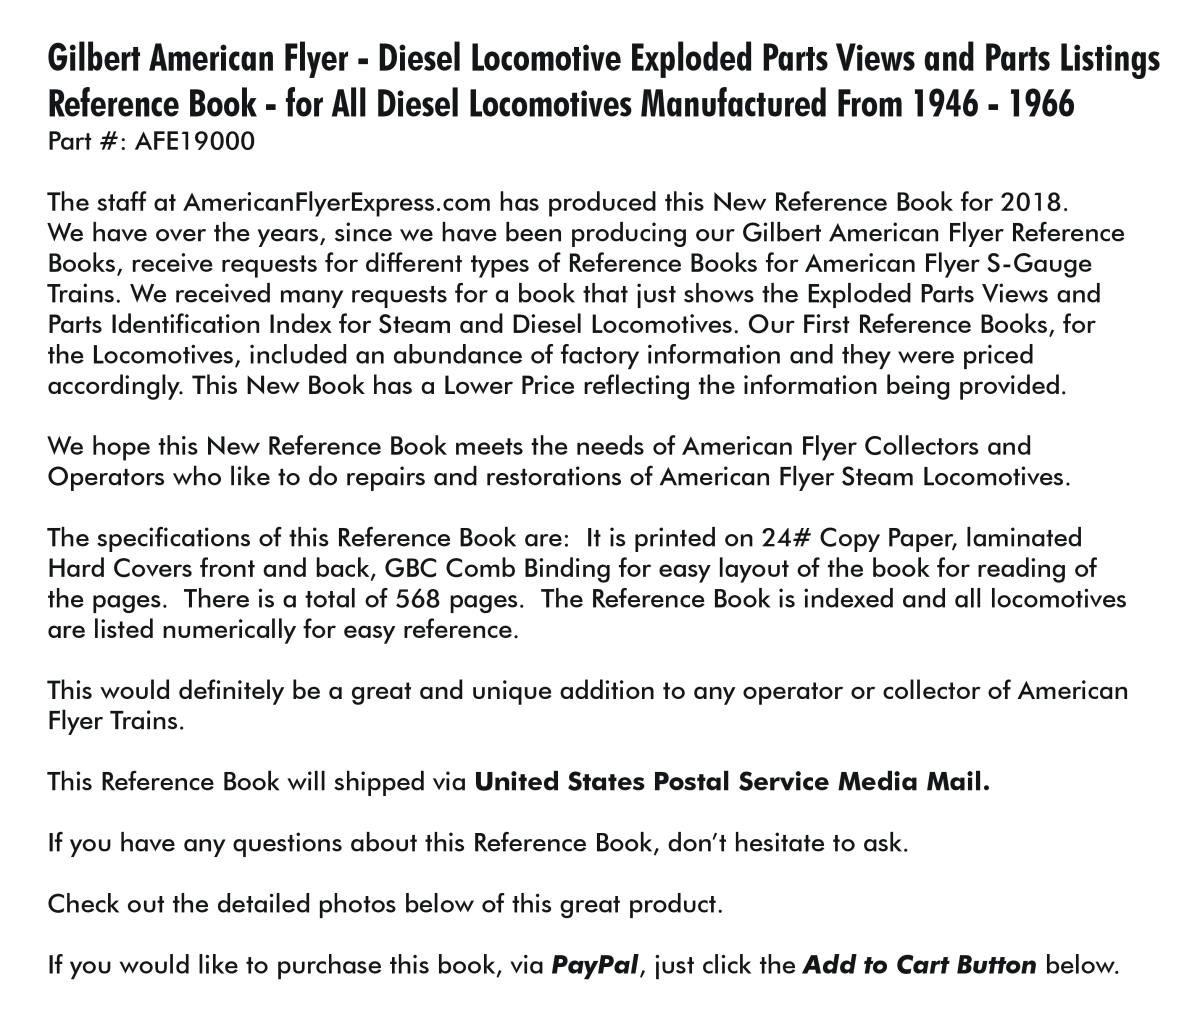 American Flyer Express - Diesel Book Details